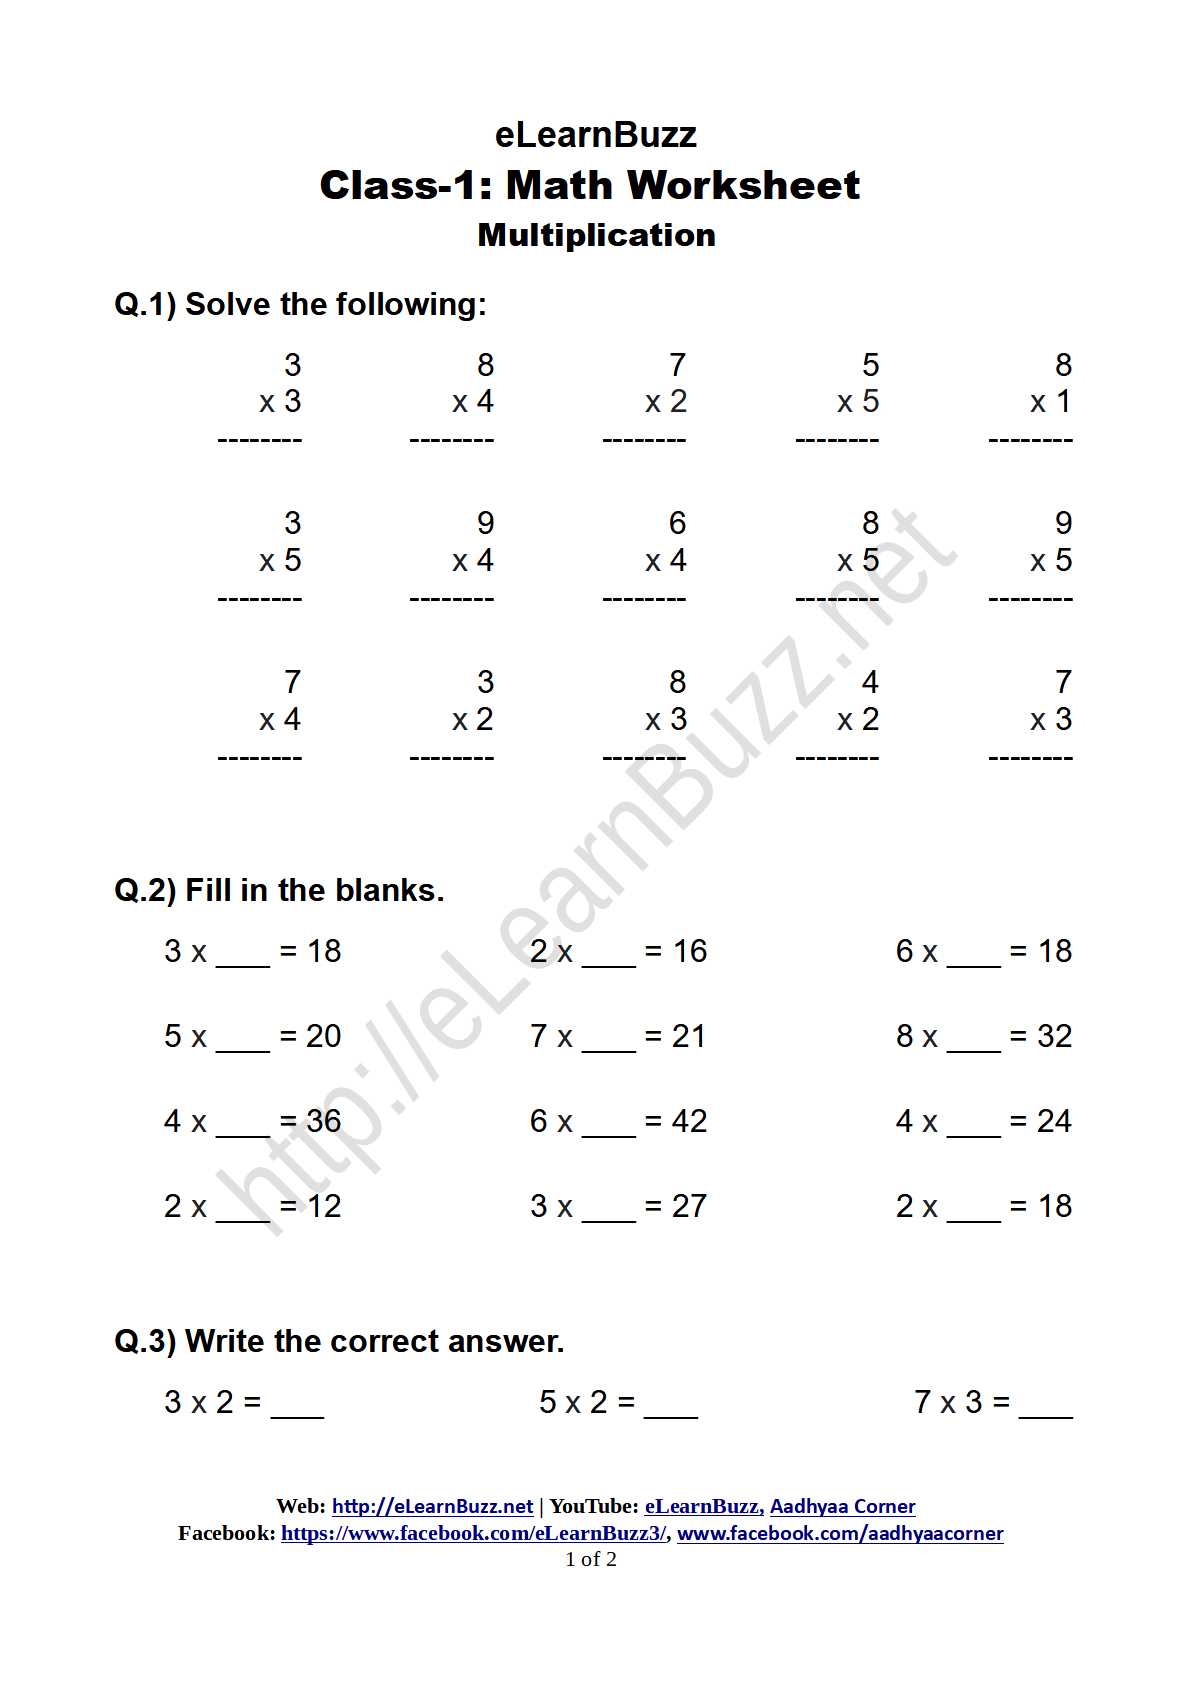 multiplication-worksheet-for-class-1-elearnbuzz